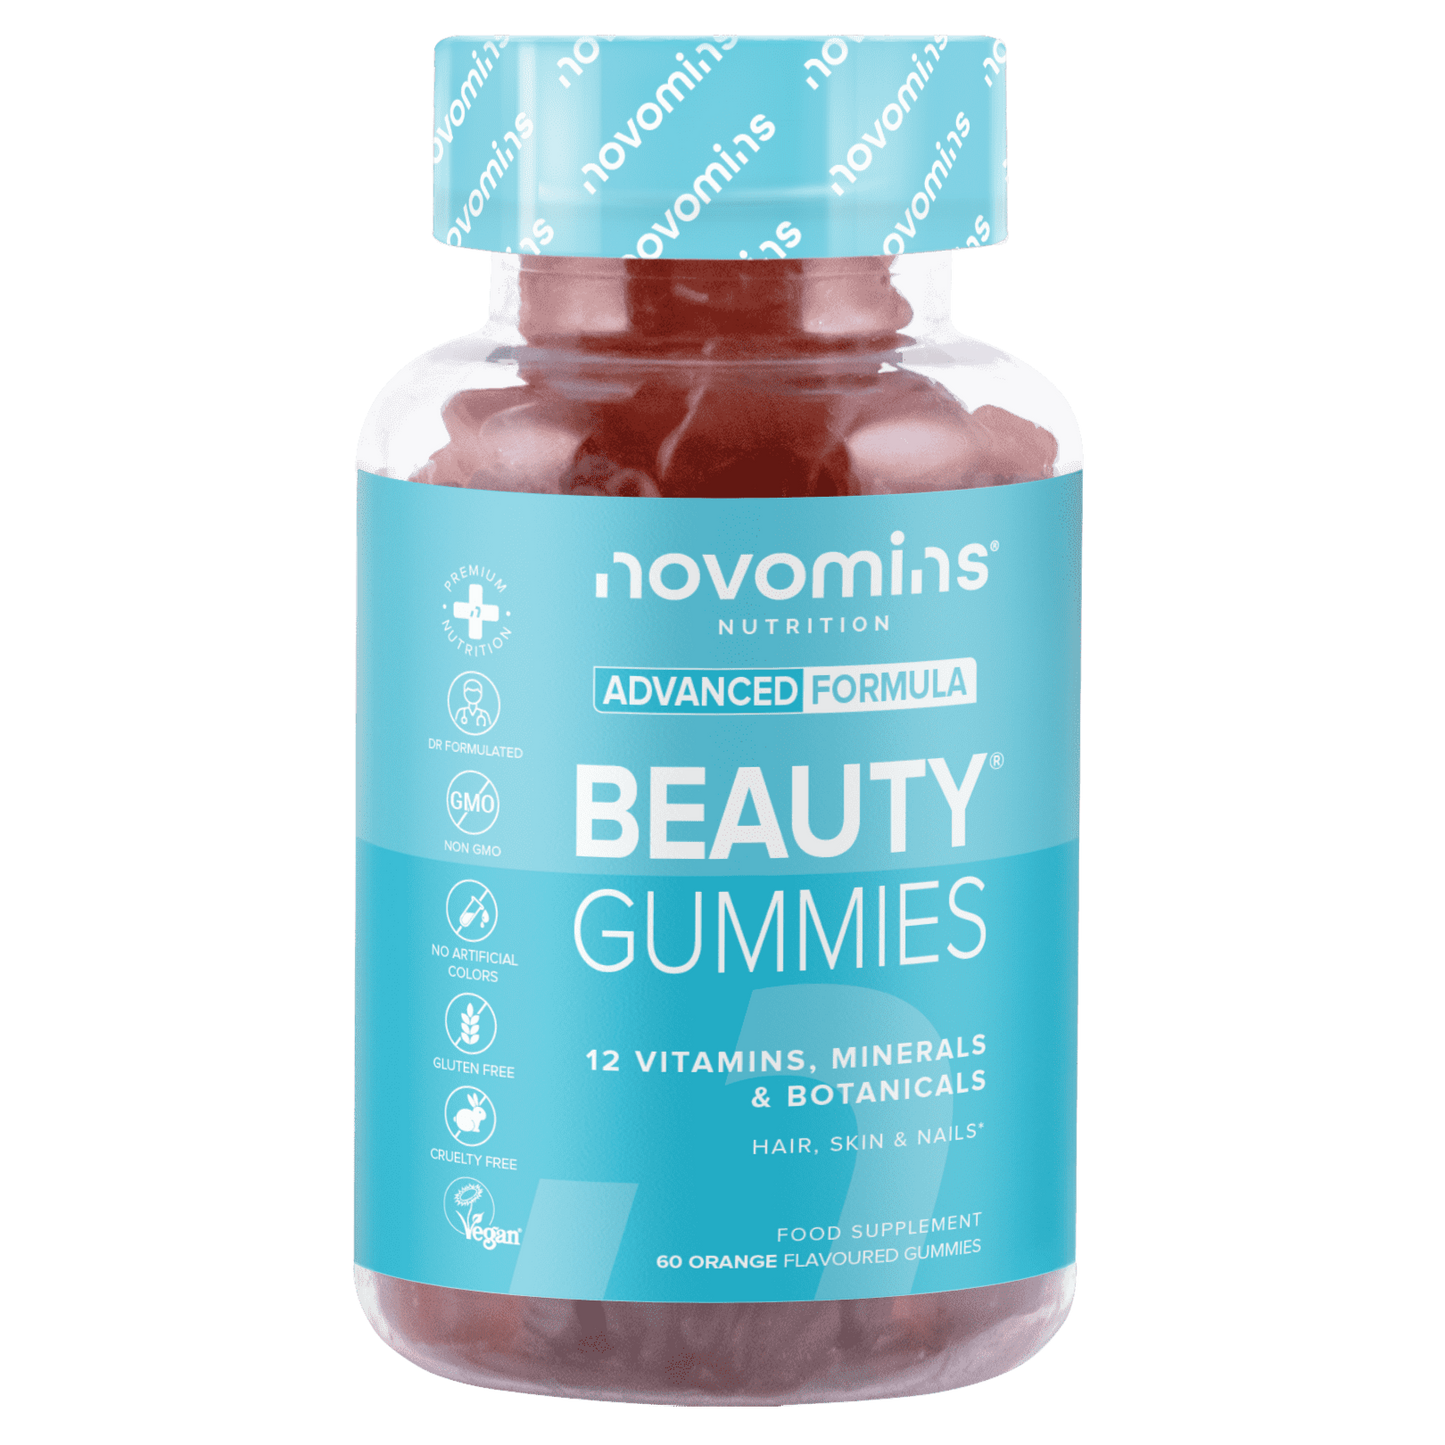 Beauty Gummies Novomins advanced formula